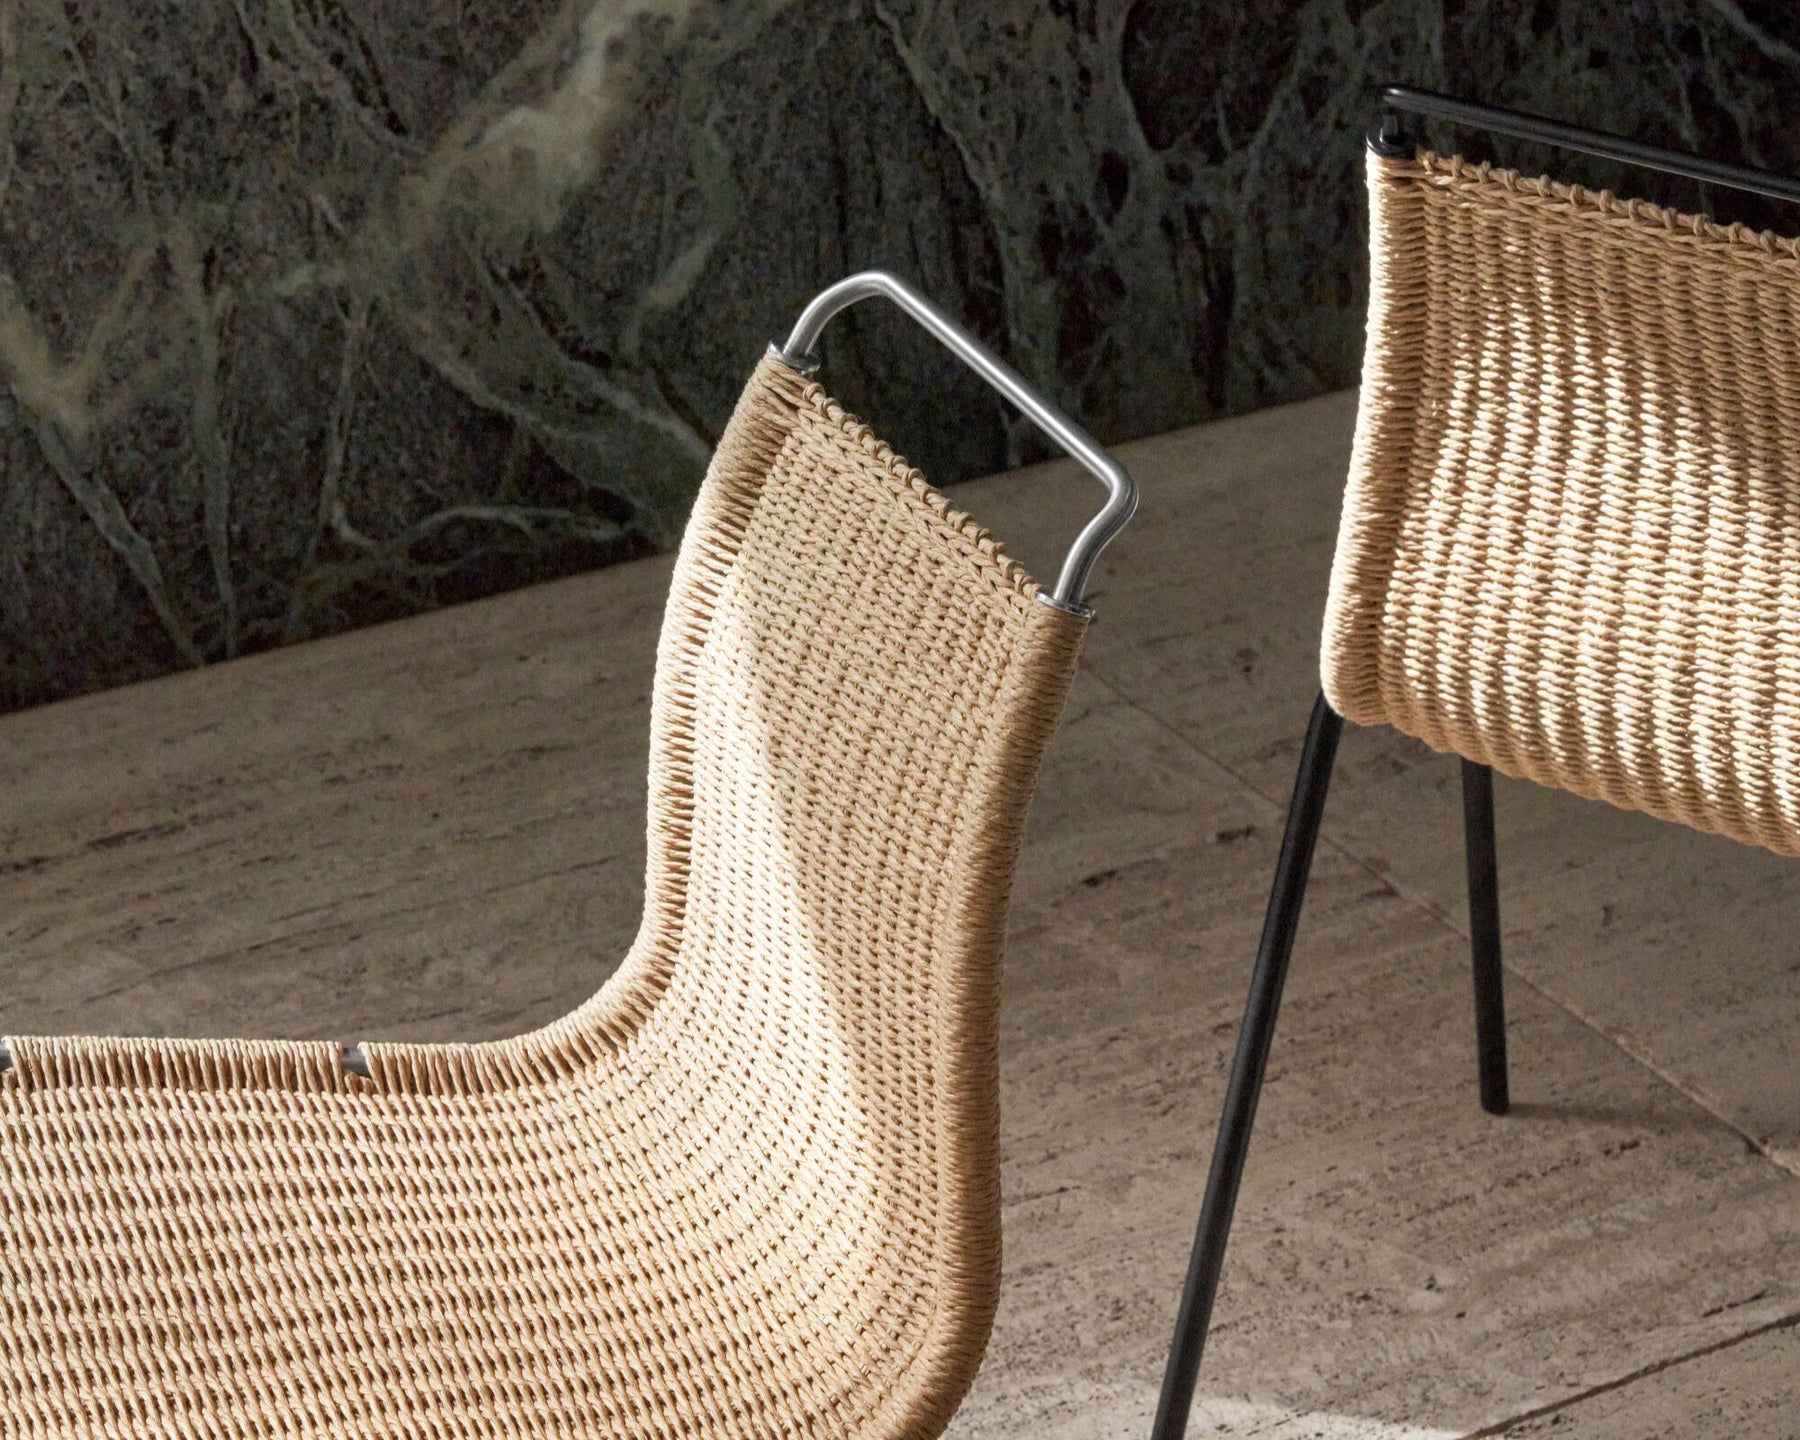 Danish Modern Chairs | DSHOP